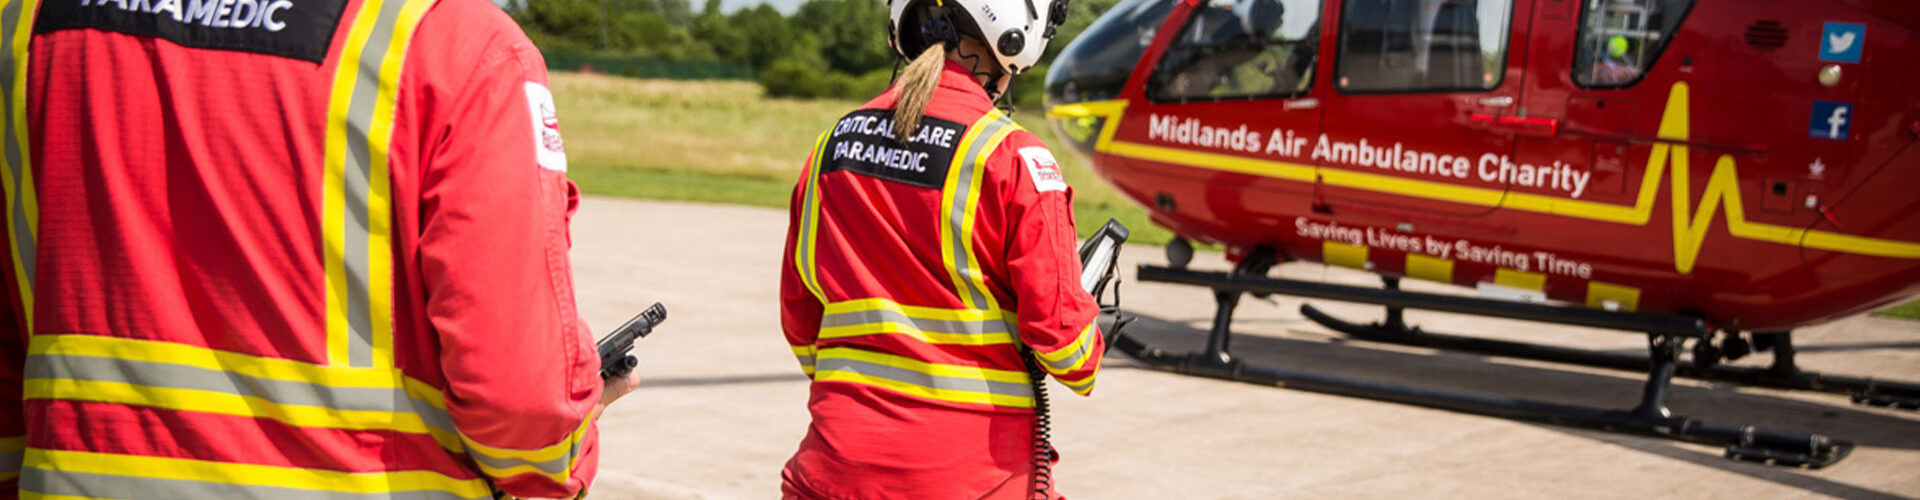 Midlands Air Ambulance Charity2